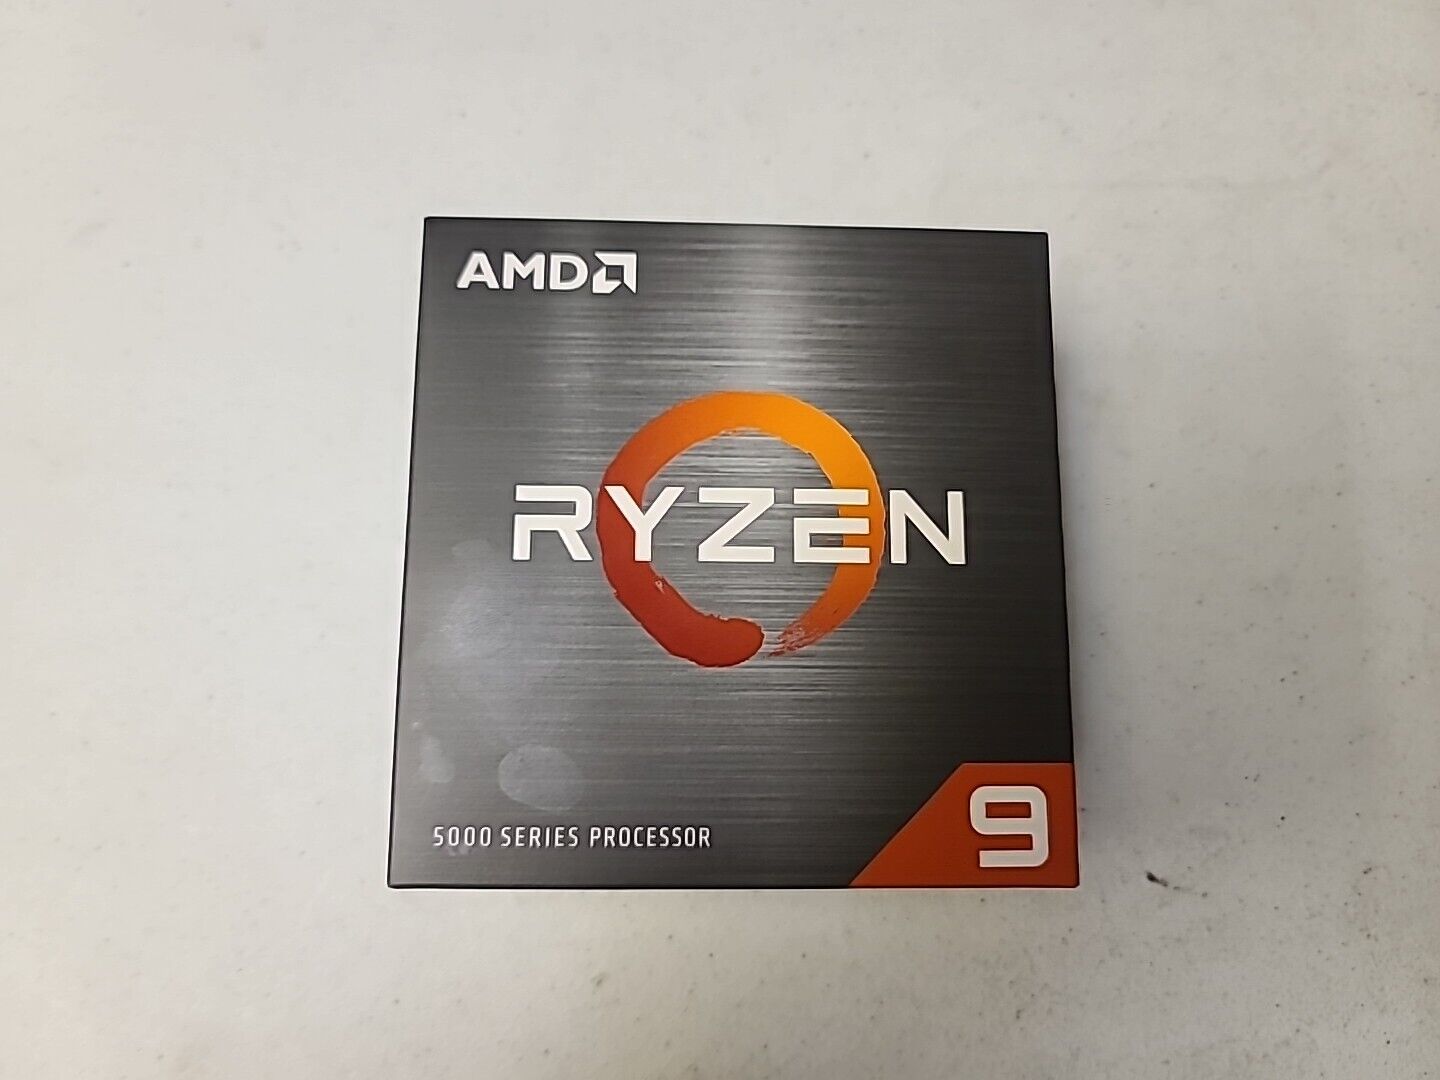 AMD Ryzen 9 5900X Desktop Processor (4.8GHz, 12 Cores, Socket AM4) Gaming Sealed